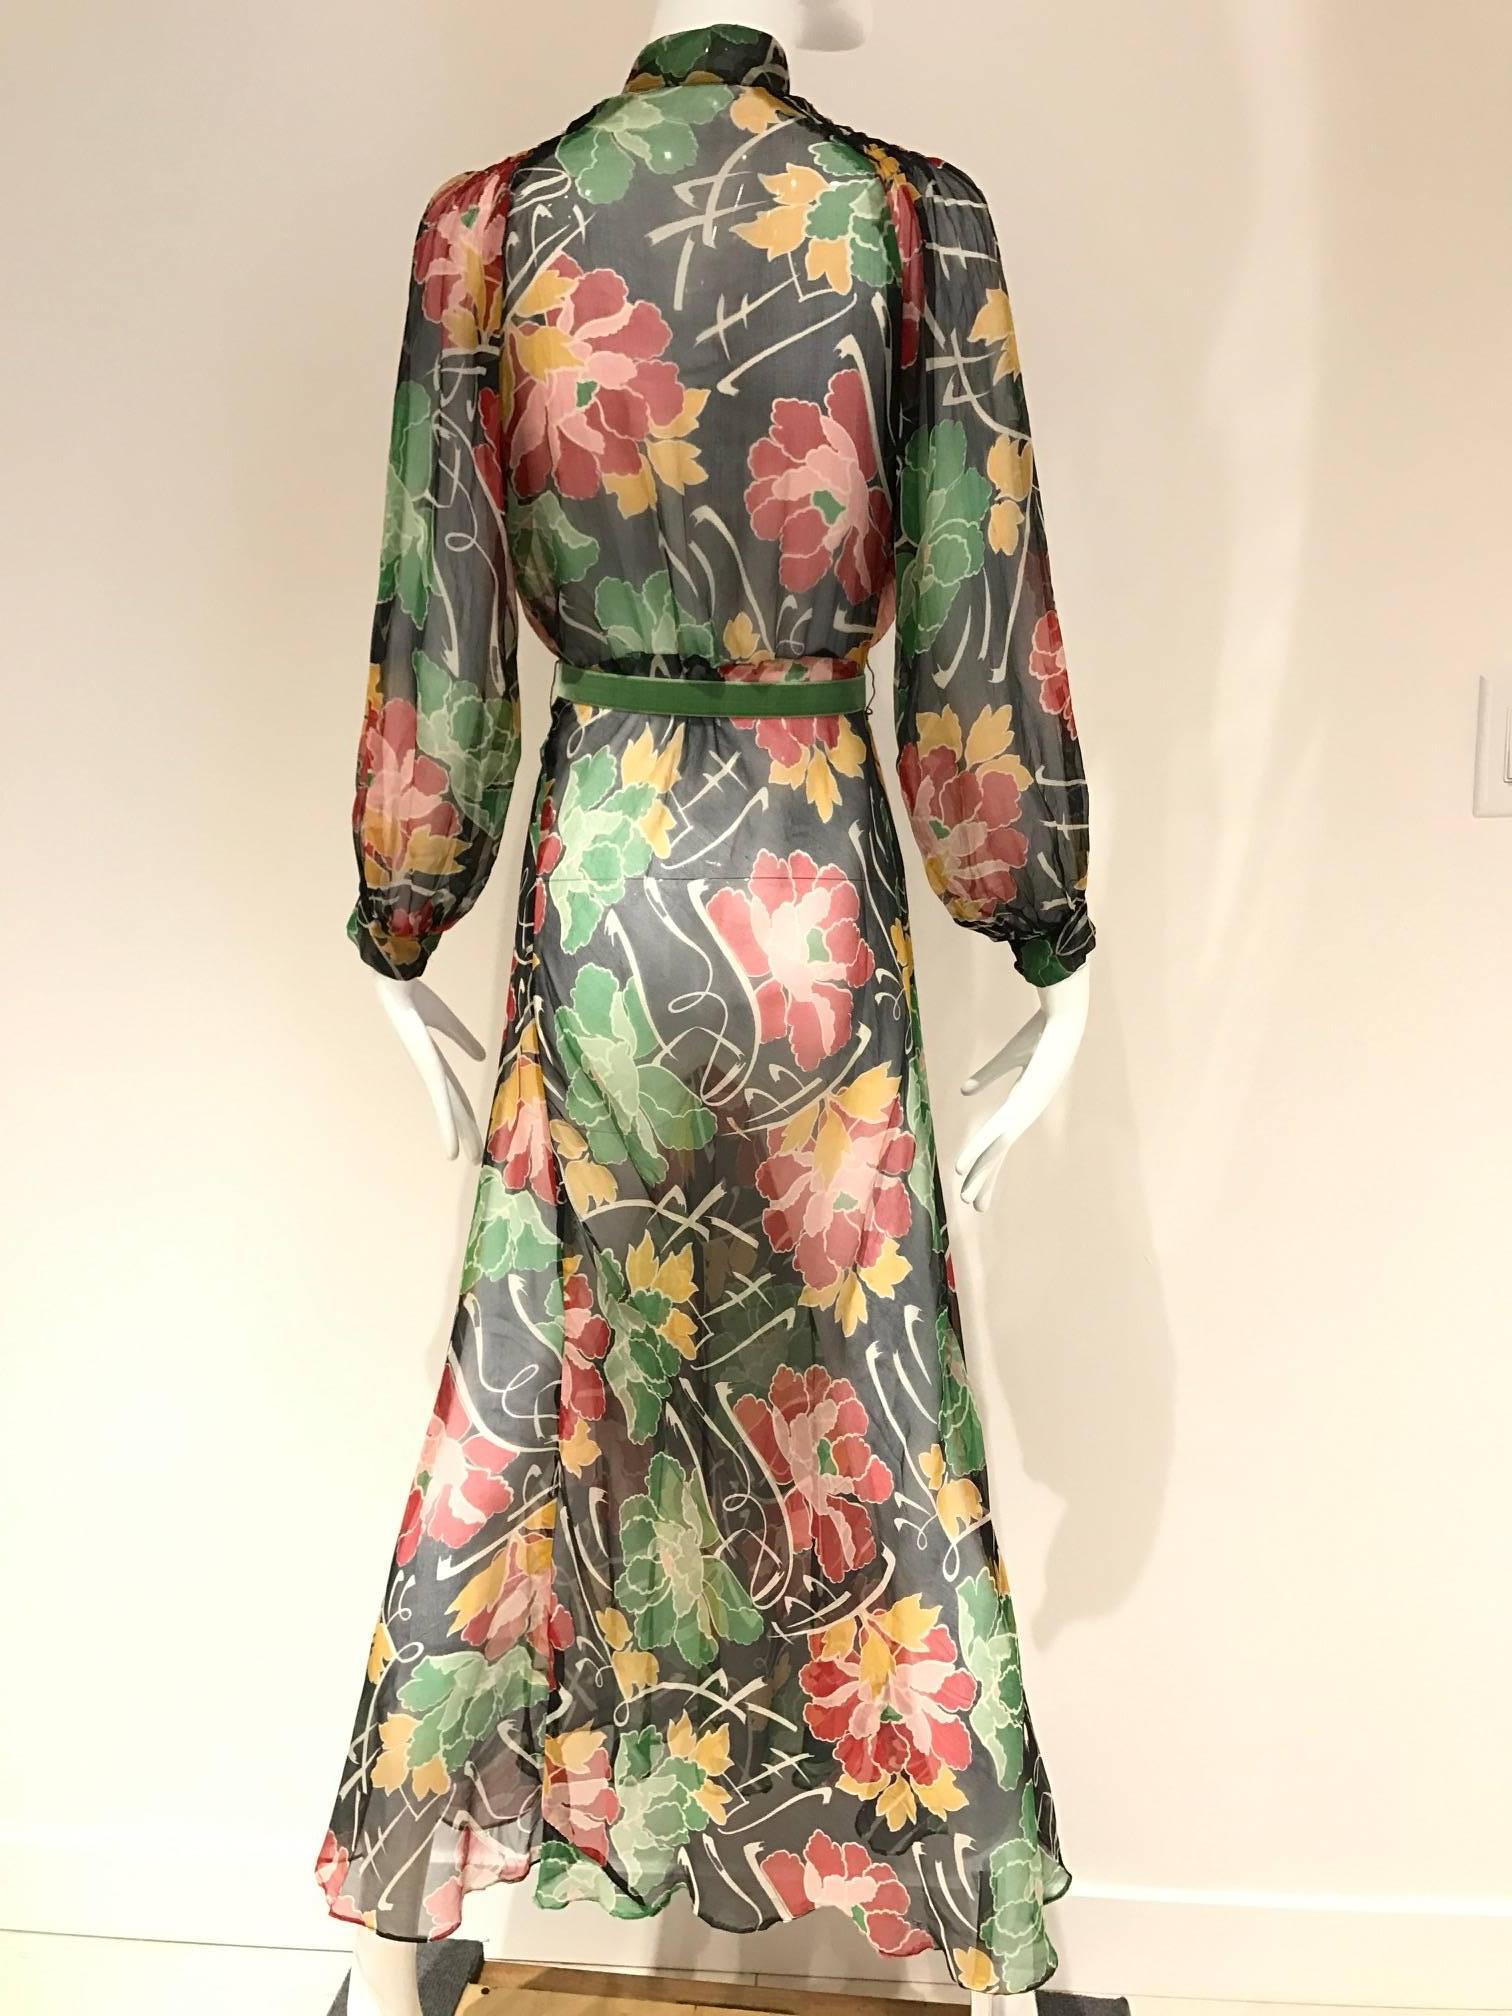 Beautiful 1930s Silk chiffon print dress in green, yellow, pink floral print with green velvet belt. Size 6. Dress has no zipper. ( slip on)
Bust: 36